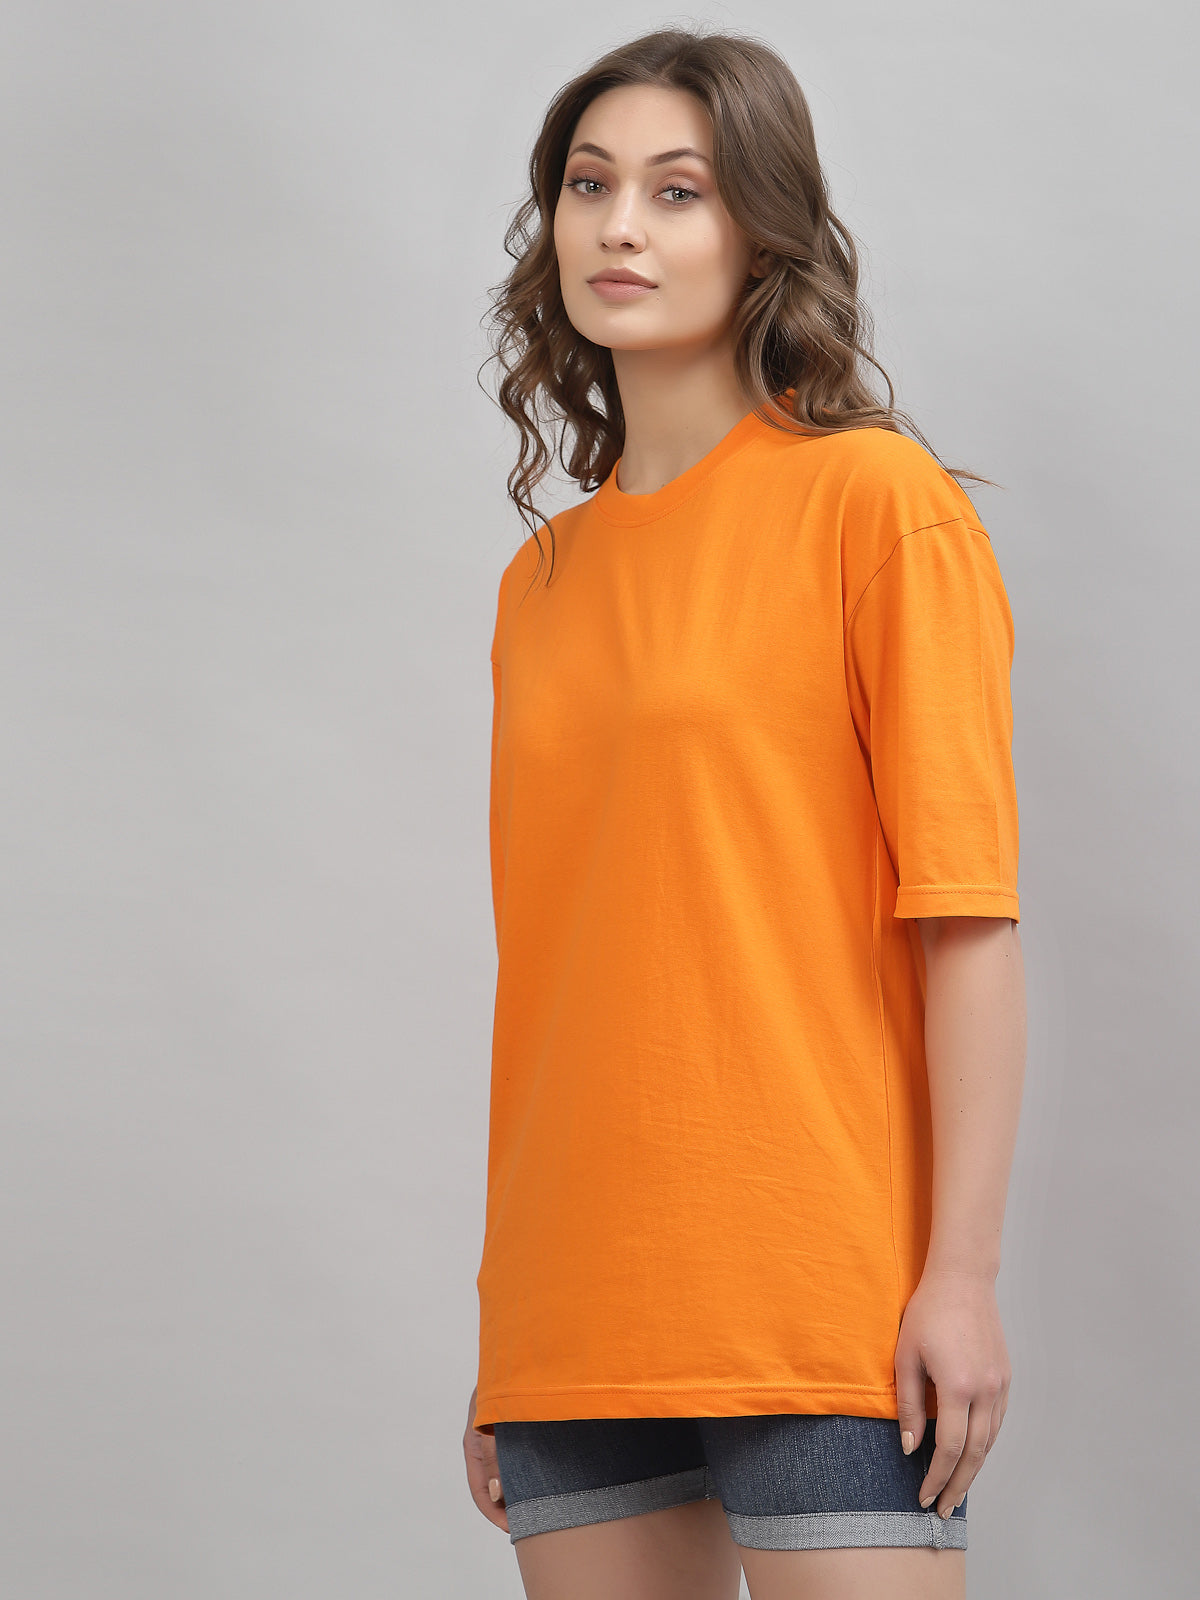 Neon Orange Unisex Plain Oversized Tee for Women